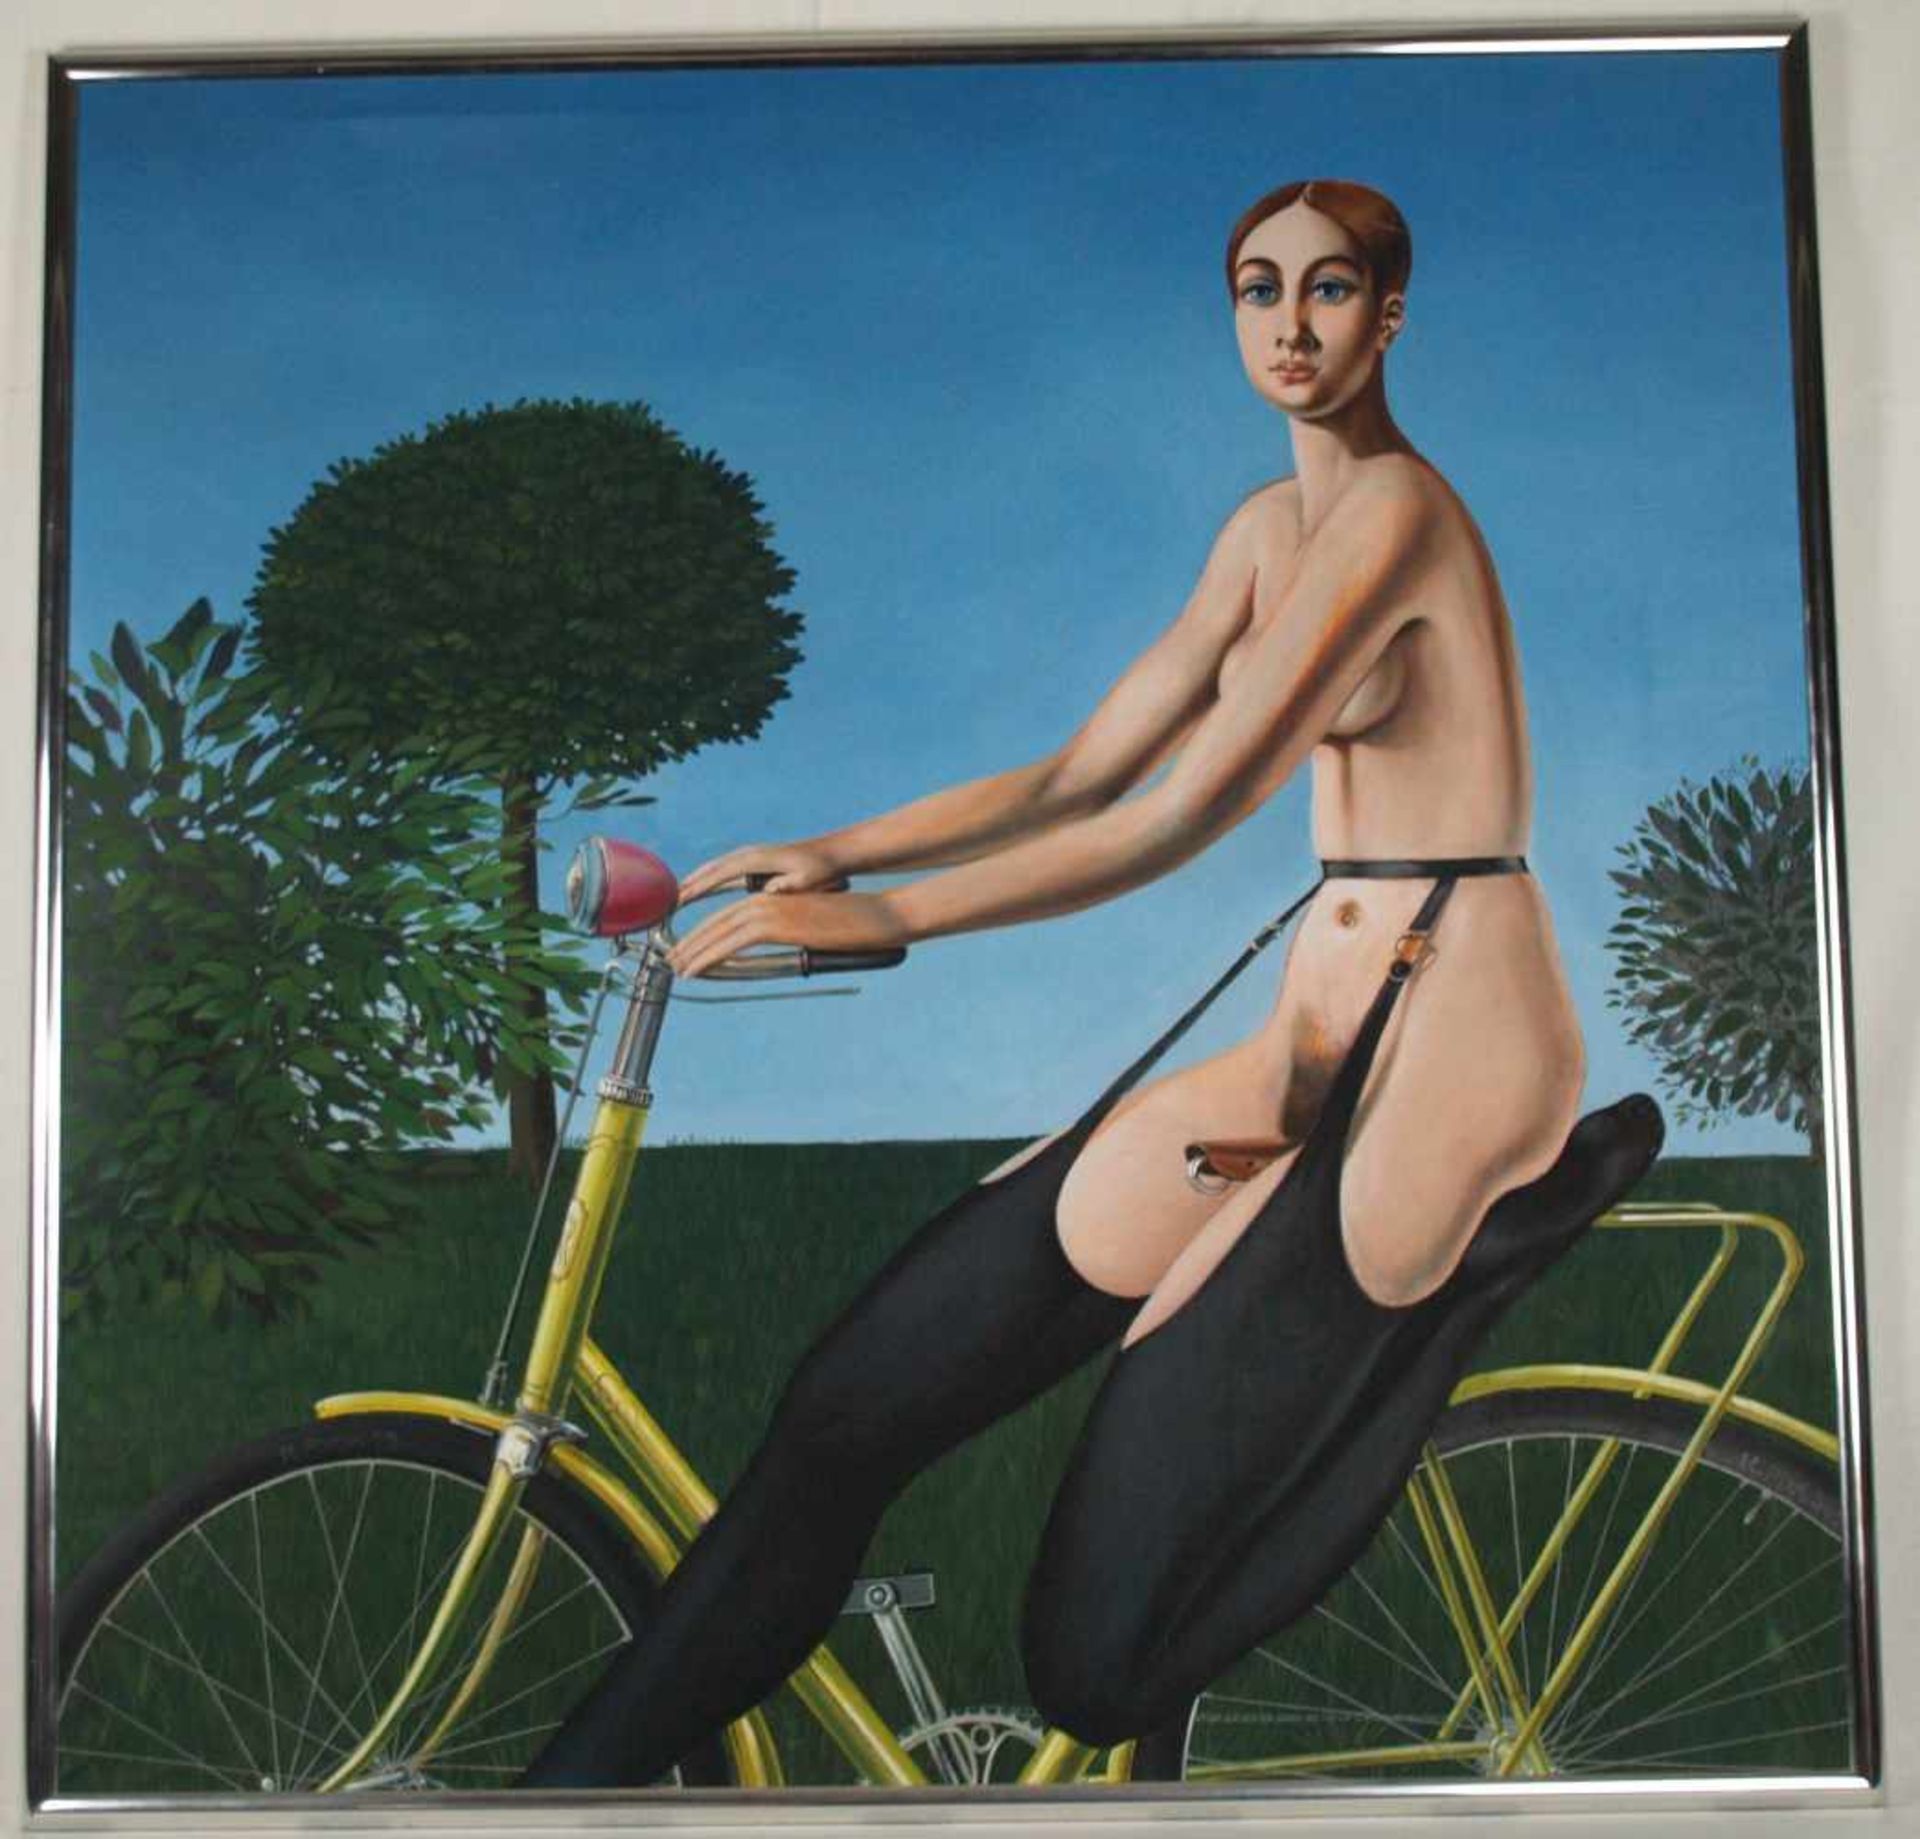 Plotin,Henri (*1939 Berlin)- "La cycliste insolante",Öl auf Leinwand,1973,Radreifen mit